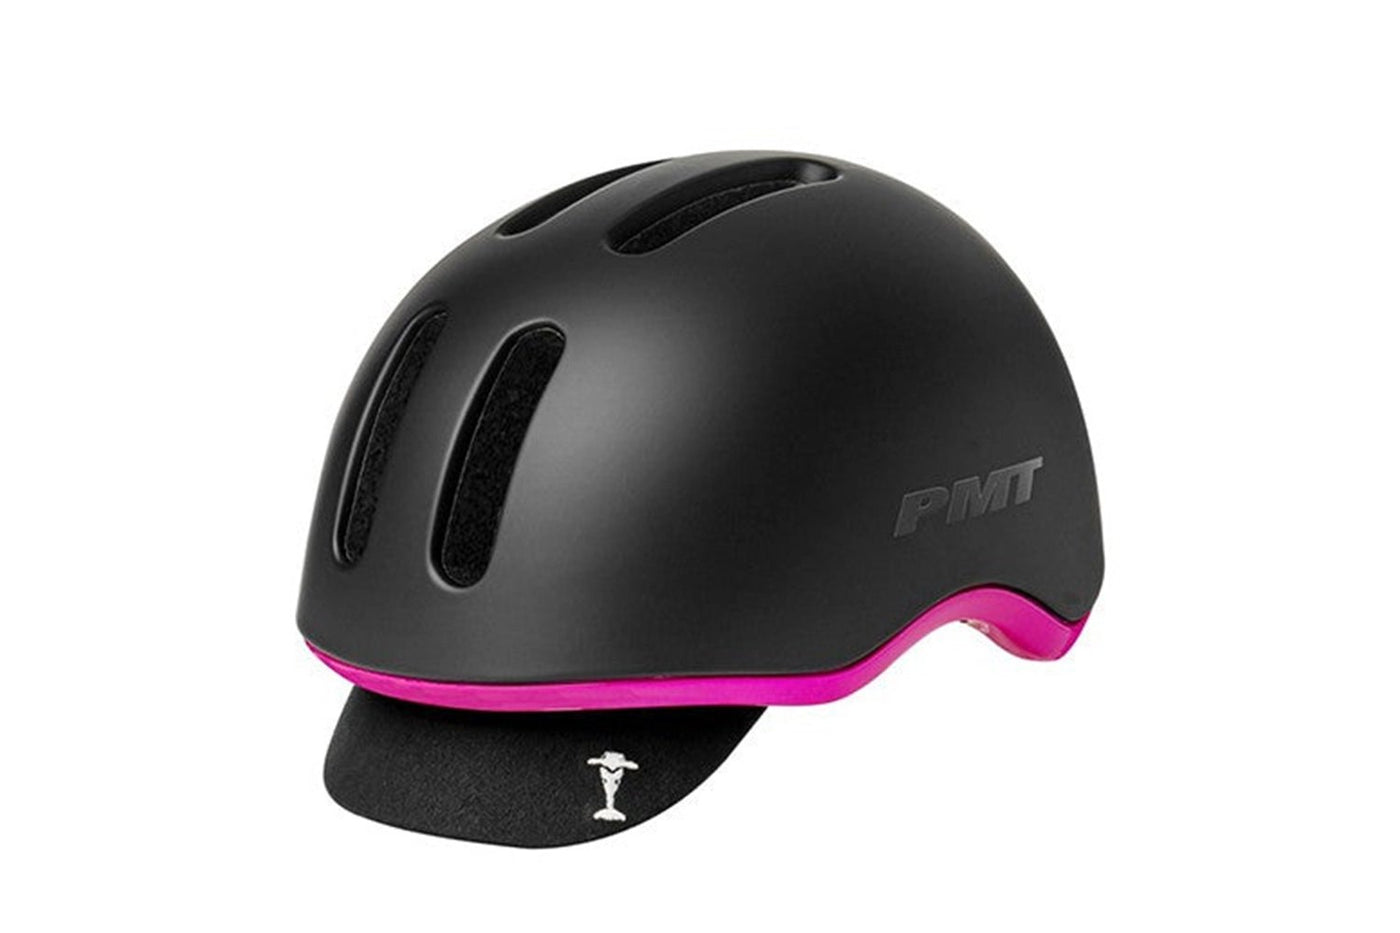 Ebike helmet - Ultralight adjustable EBike Helmet